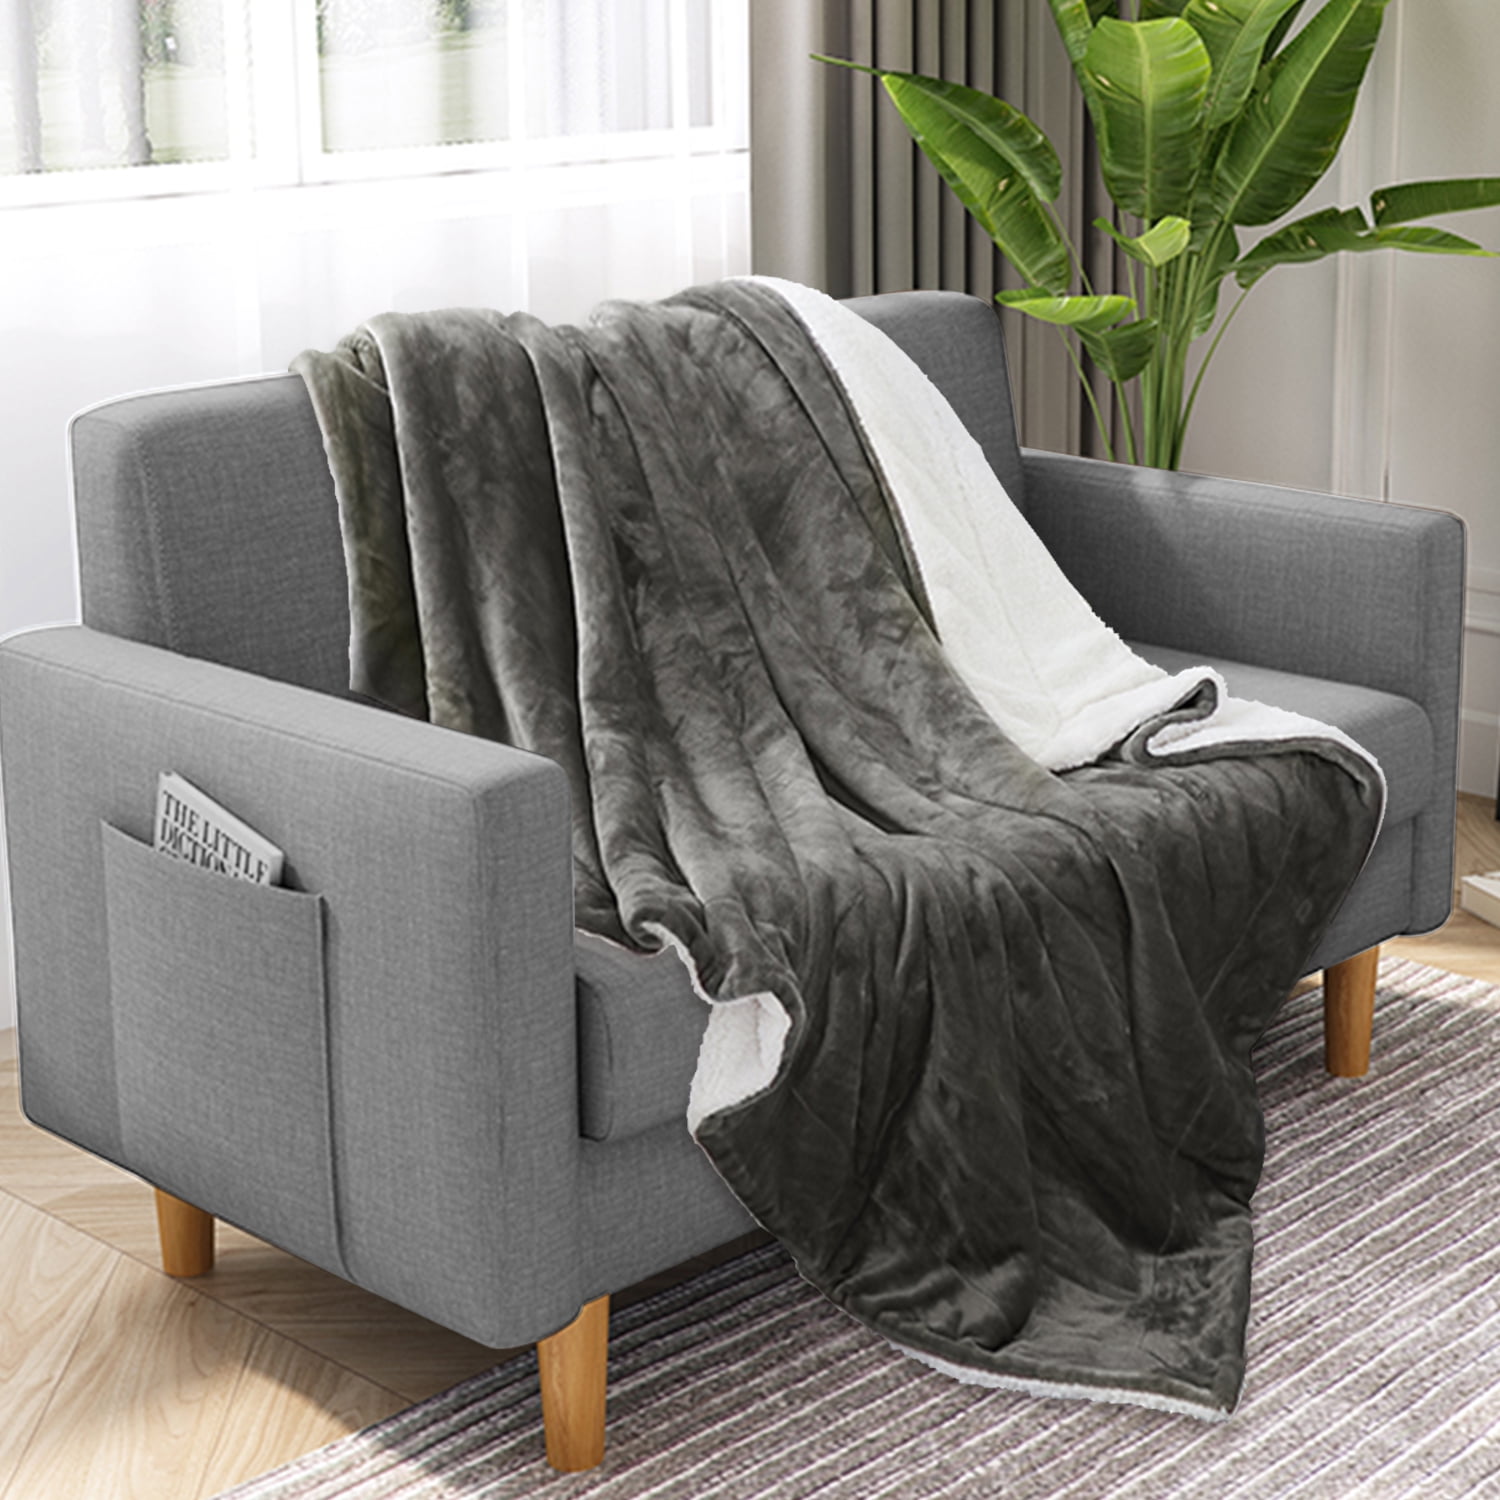 Luxury Warm Soft Faux Fur Popcorn Fleece Throw Blanket Sofa Bed Travel Throwover 